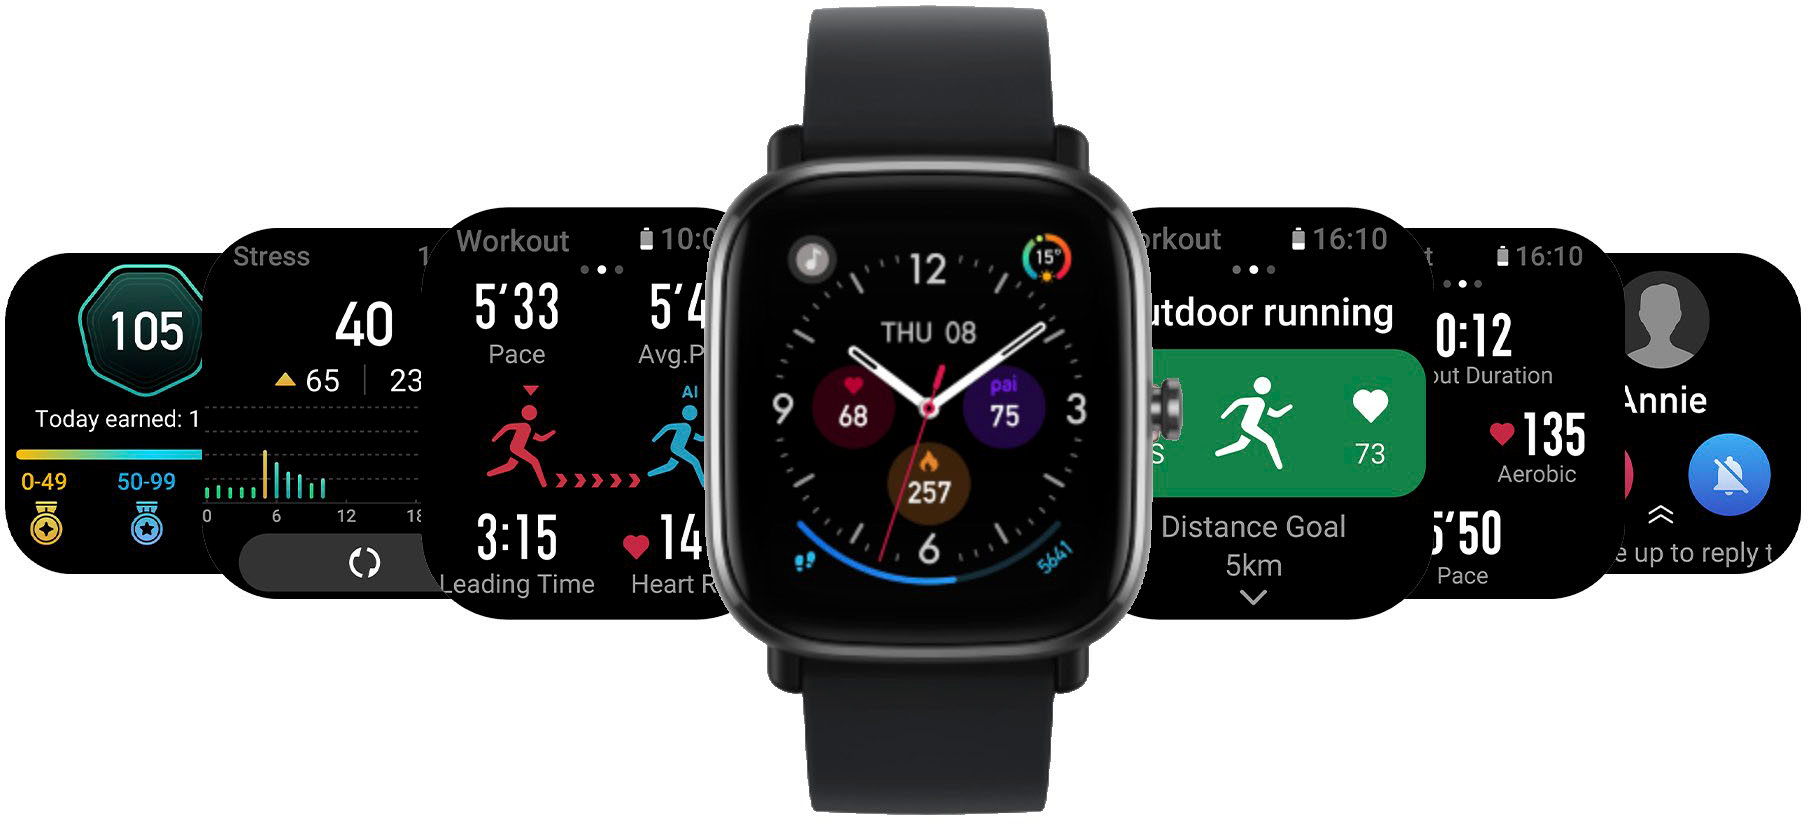 Apple Watch Series 6 VS Amazfit GTS 2, ¿qué smartwatch comprar